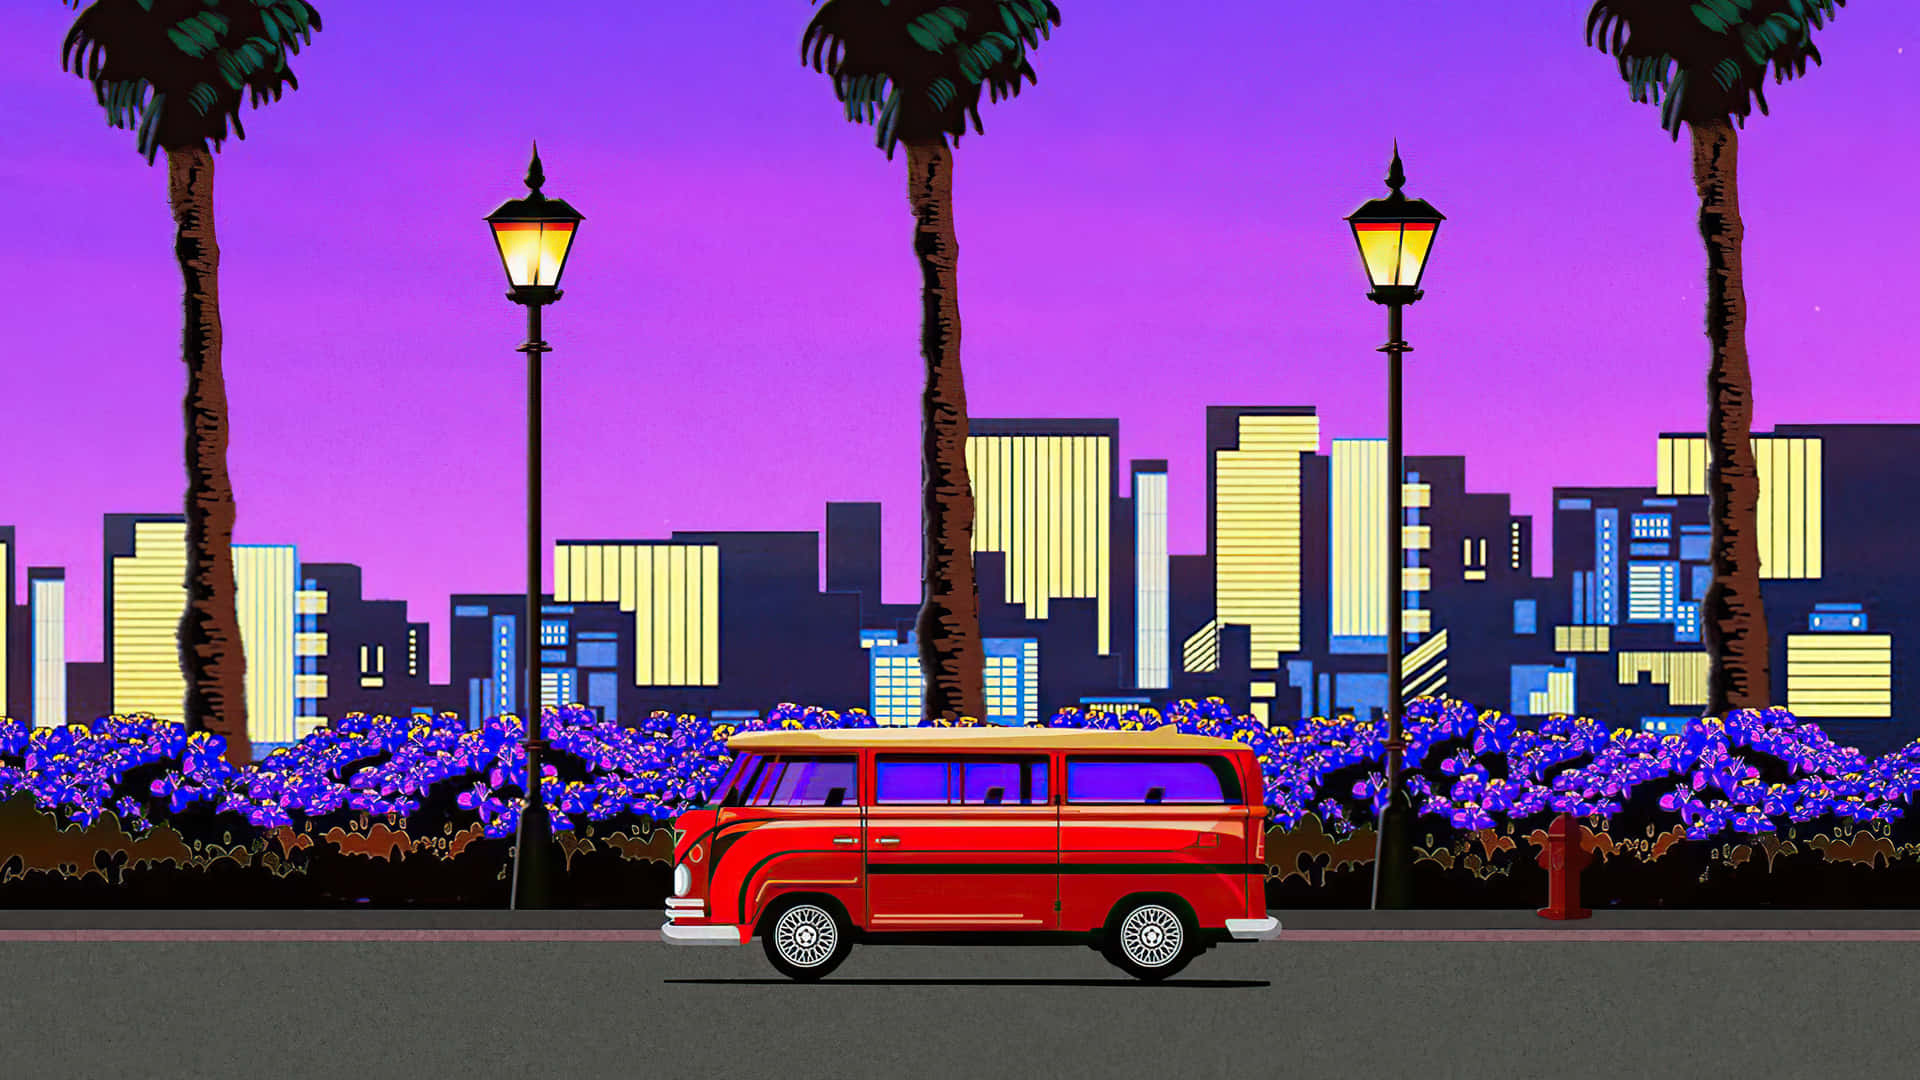 A Red Van In The City Wallpaper